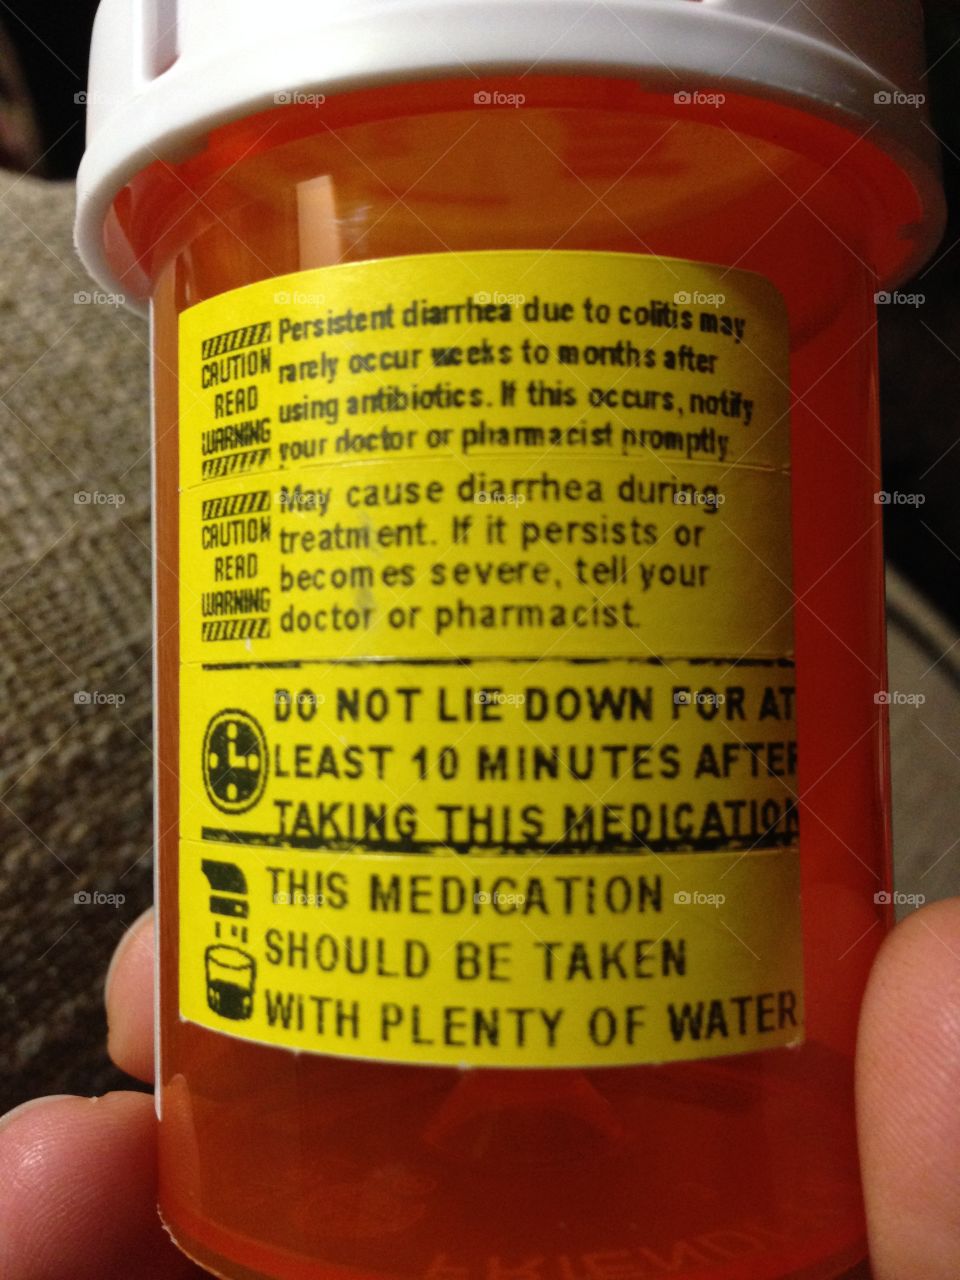 Warning label on antibiotic medication bottle.